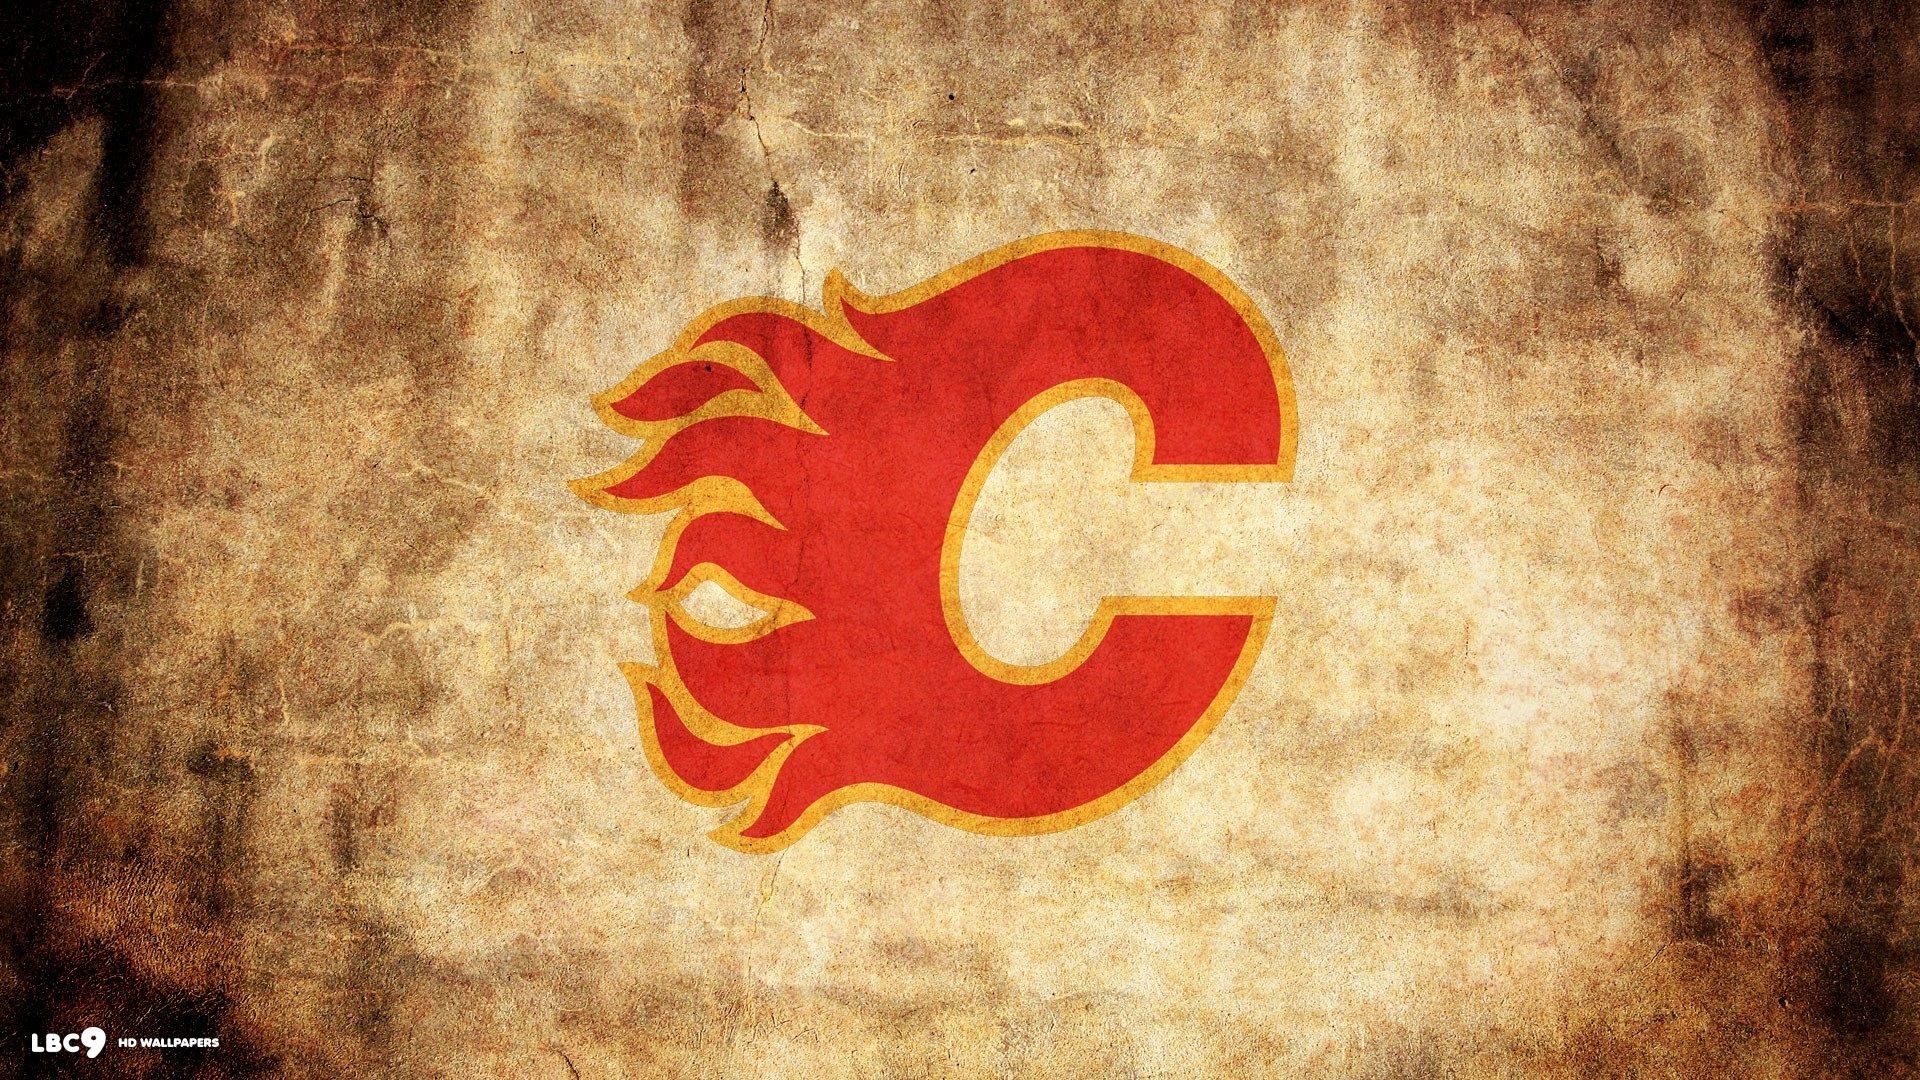 1920x1080 Calgary Flames Wallpapers